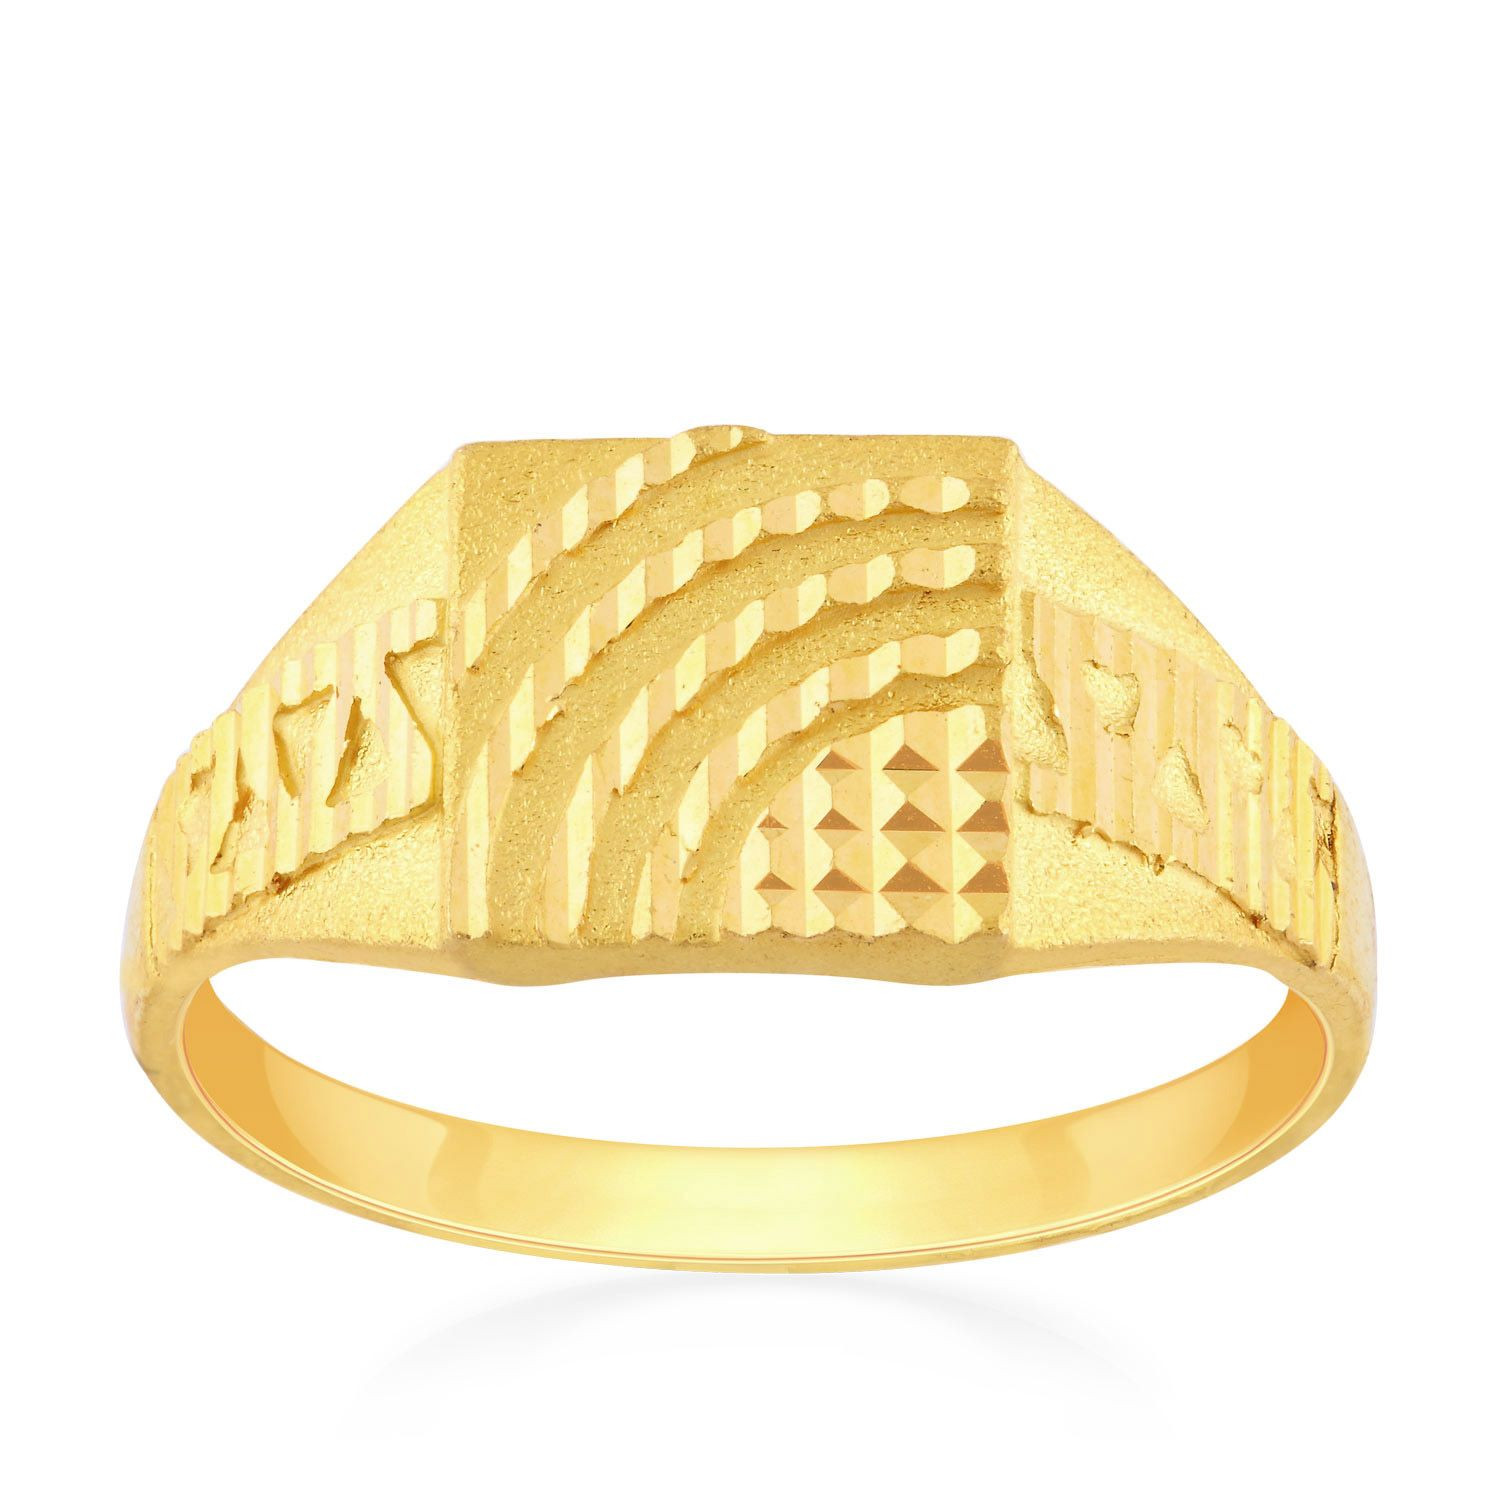 Buy Malabar Gold Ring RG722490 for Men Online | Malabar Gold & Diamonds